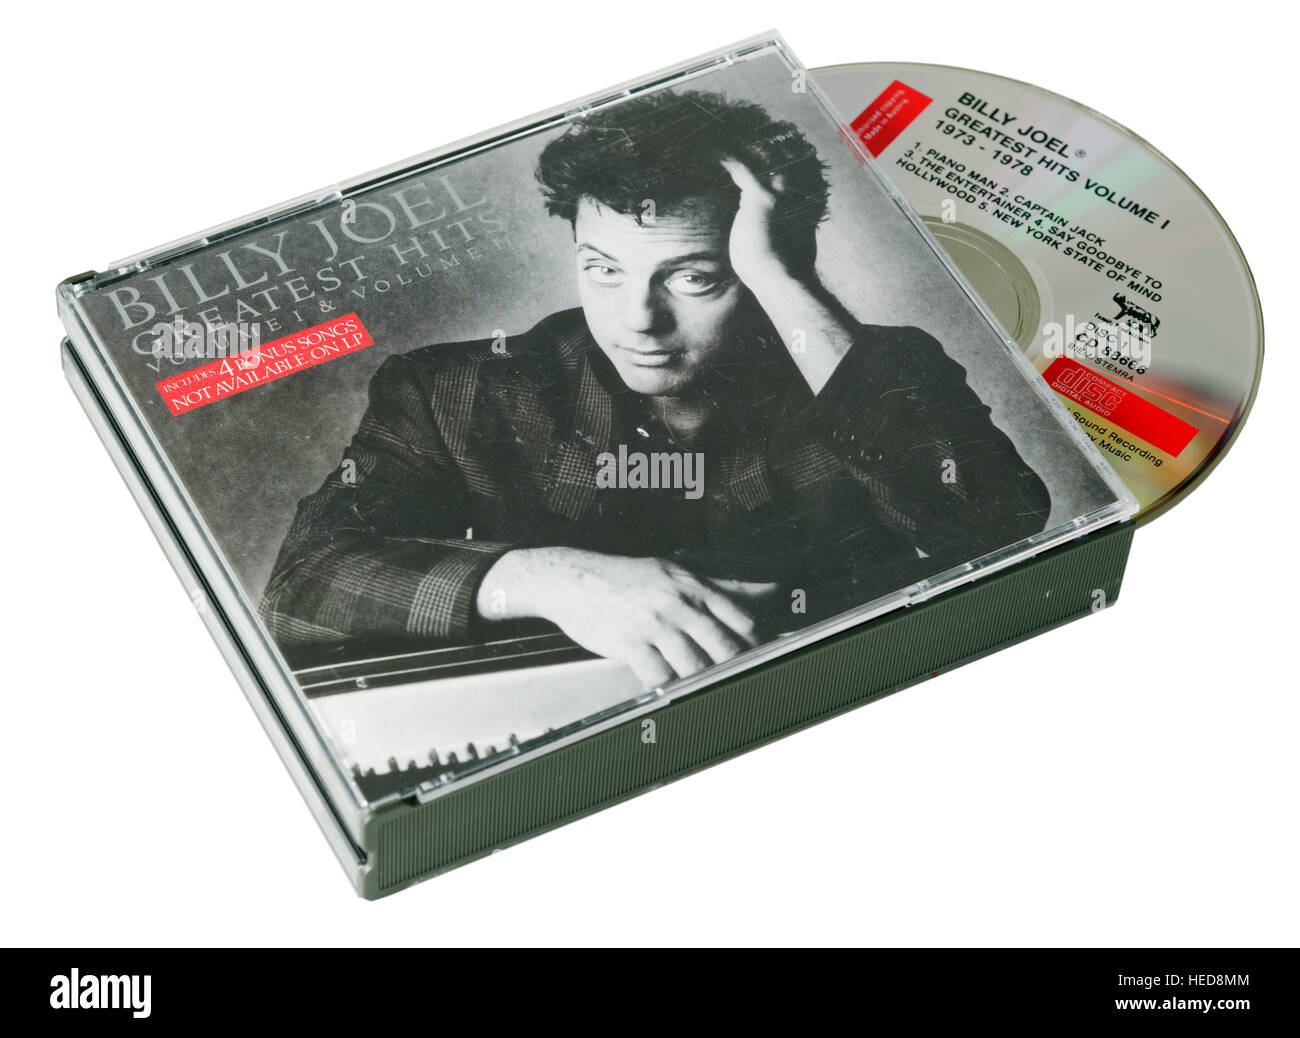 Billy Joel Greatest Hits CD Stock Photo